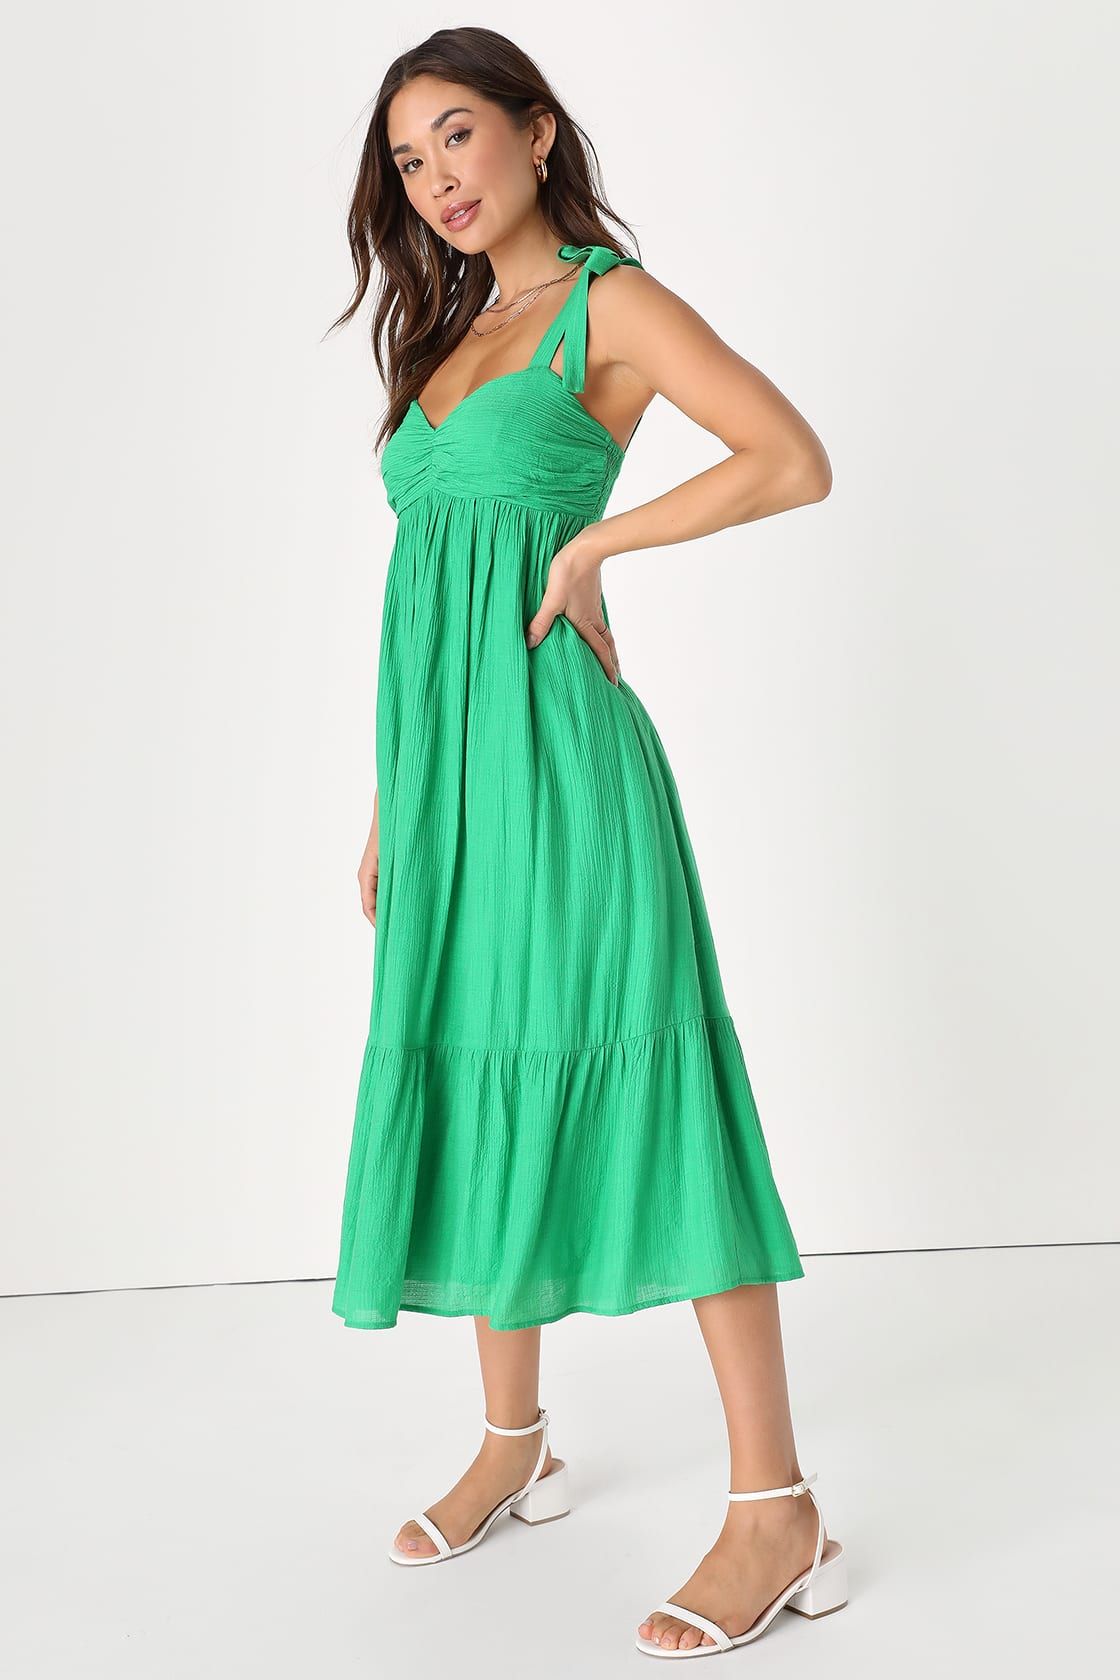 Romantic in Rome Green Tie-Strap Empire Waist Midi Dress | Lulus (US)